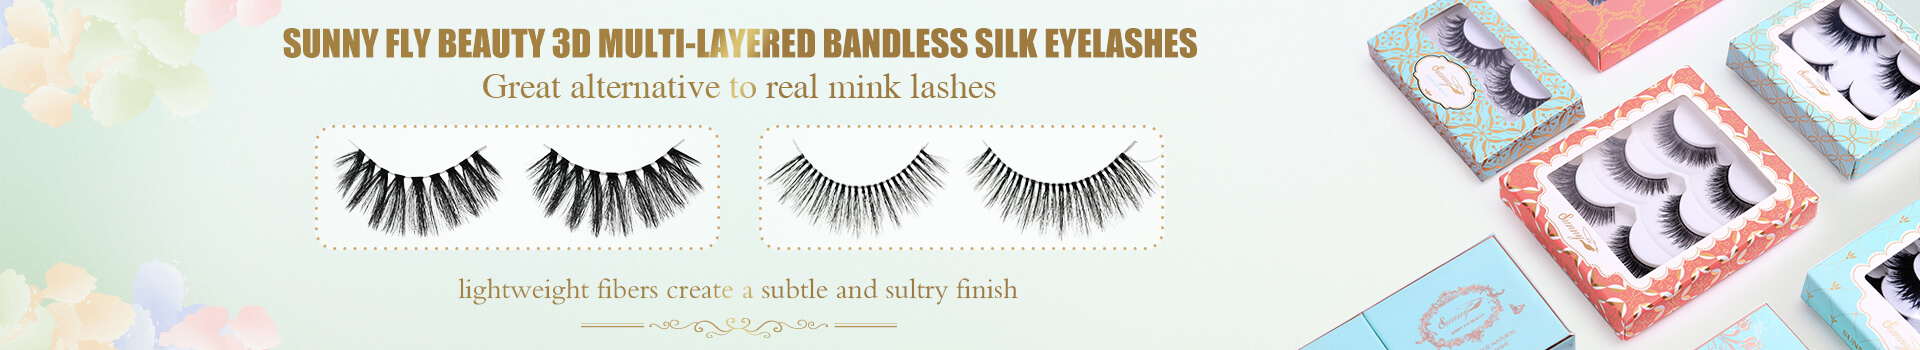 3D Multi-Layered Bandless Silk Eyelas TA05